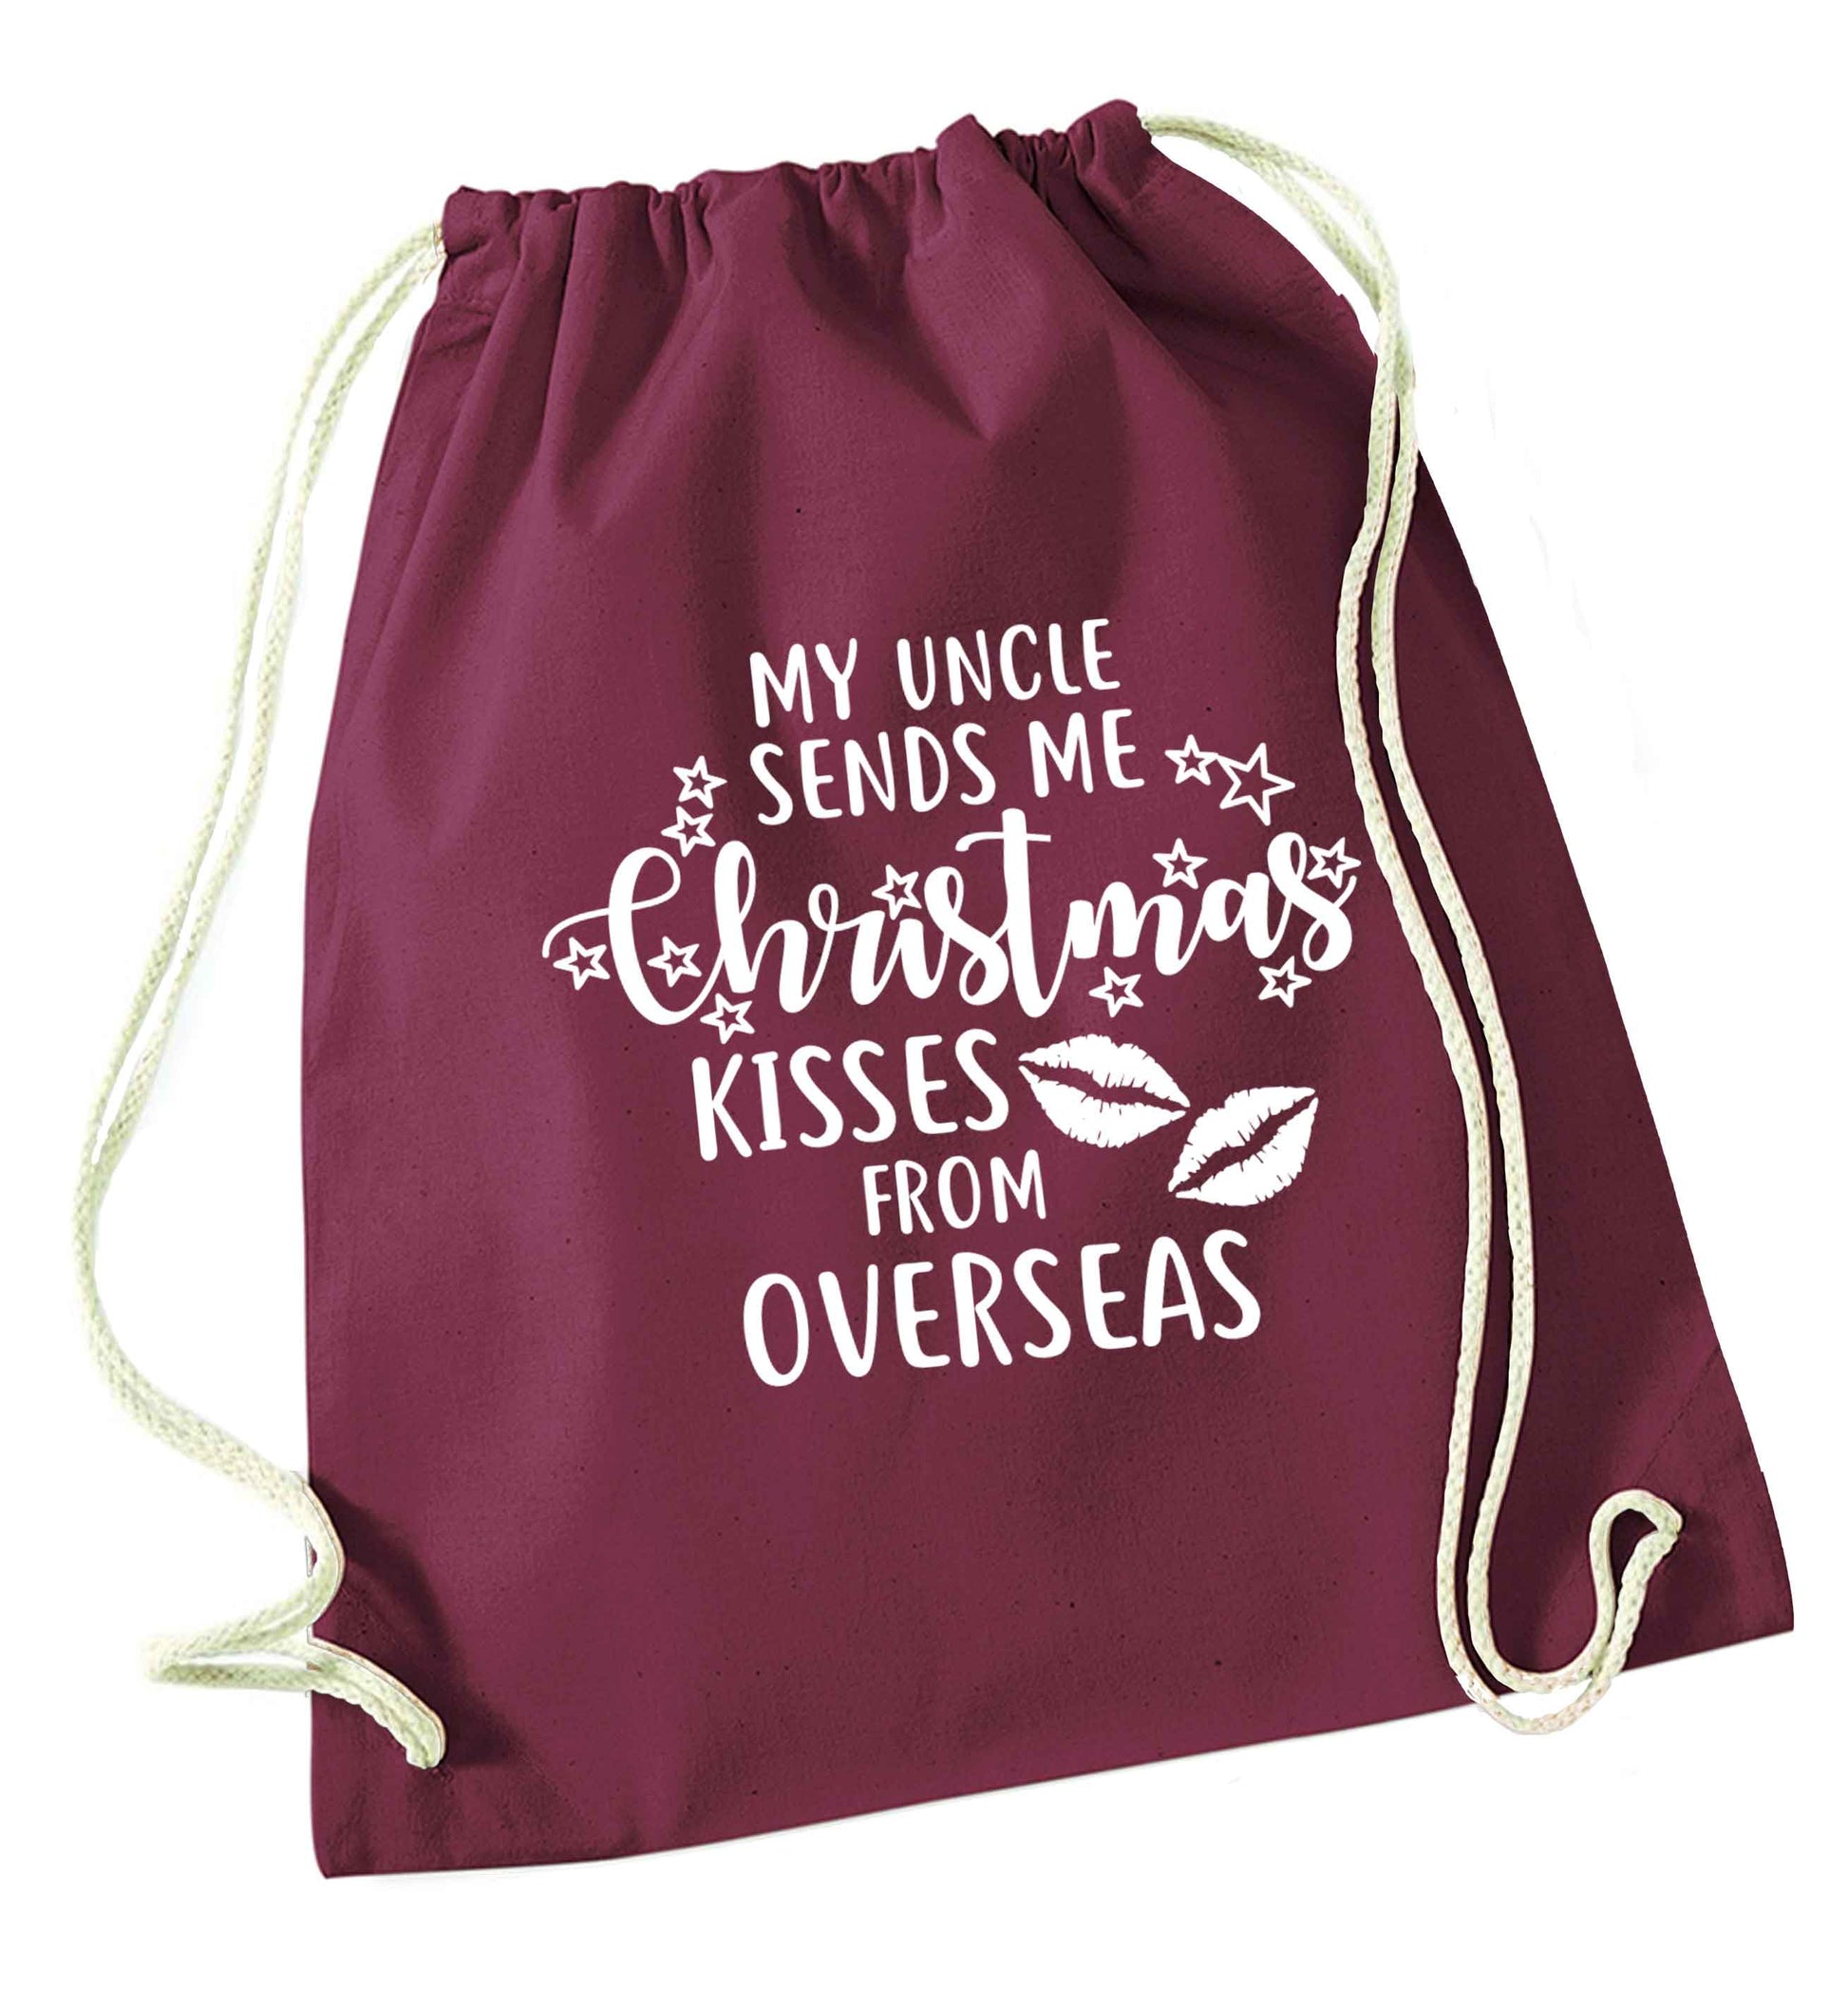 Brother Christmas Kisses Overseas maroon drawstring bag